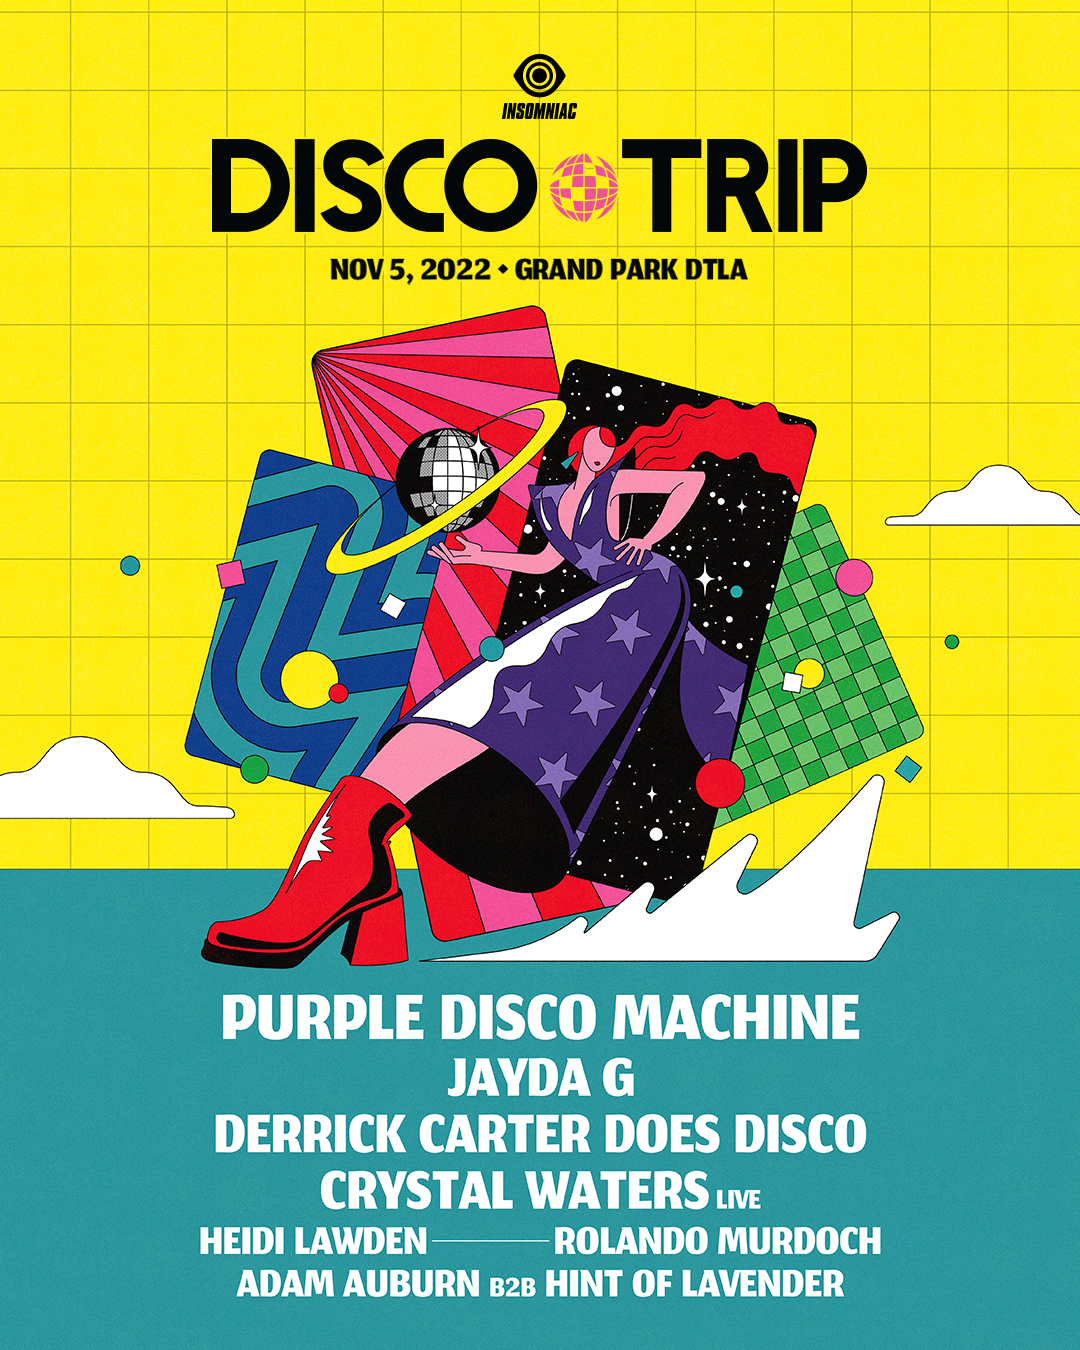 Disco Trip Lineup